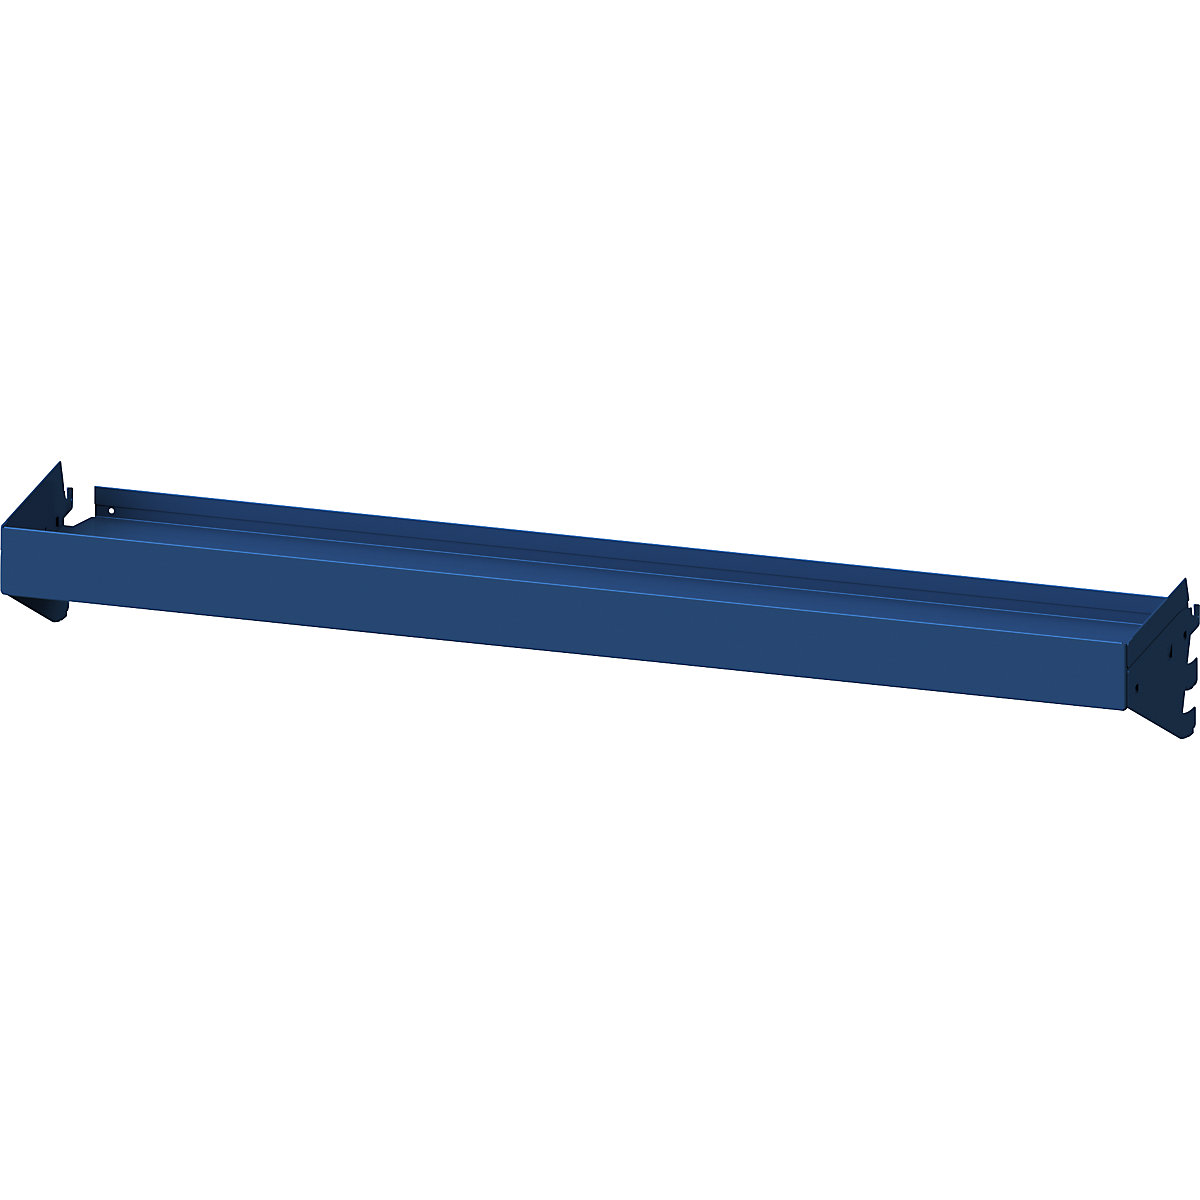 Opvanglegbord – ANKE, 75 mm hoge rand vooraan, b x d = 1250 x 250 mm, blauw-4